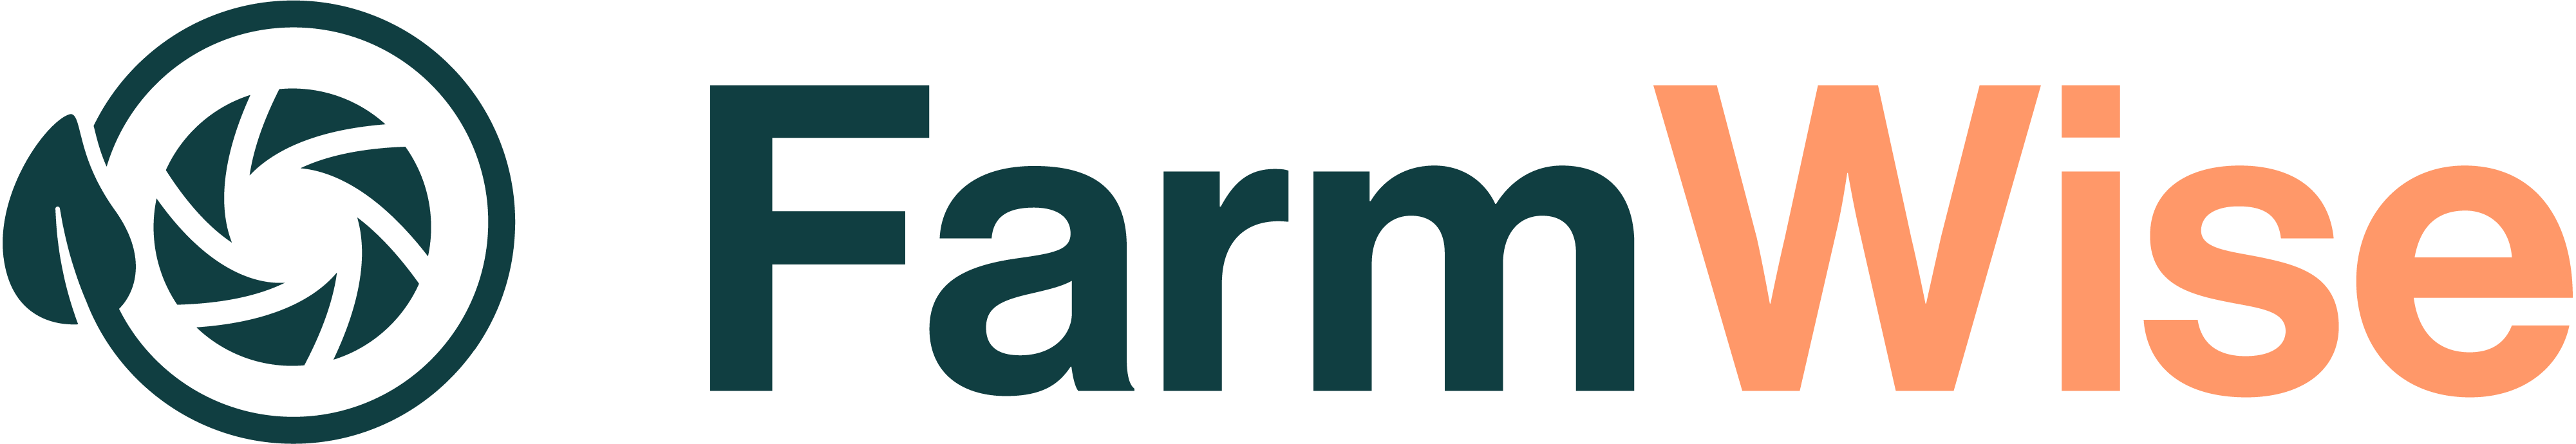 Farmwise-Logo_Full_Green-Orange